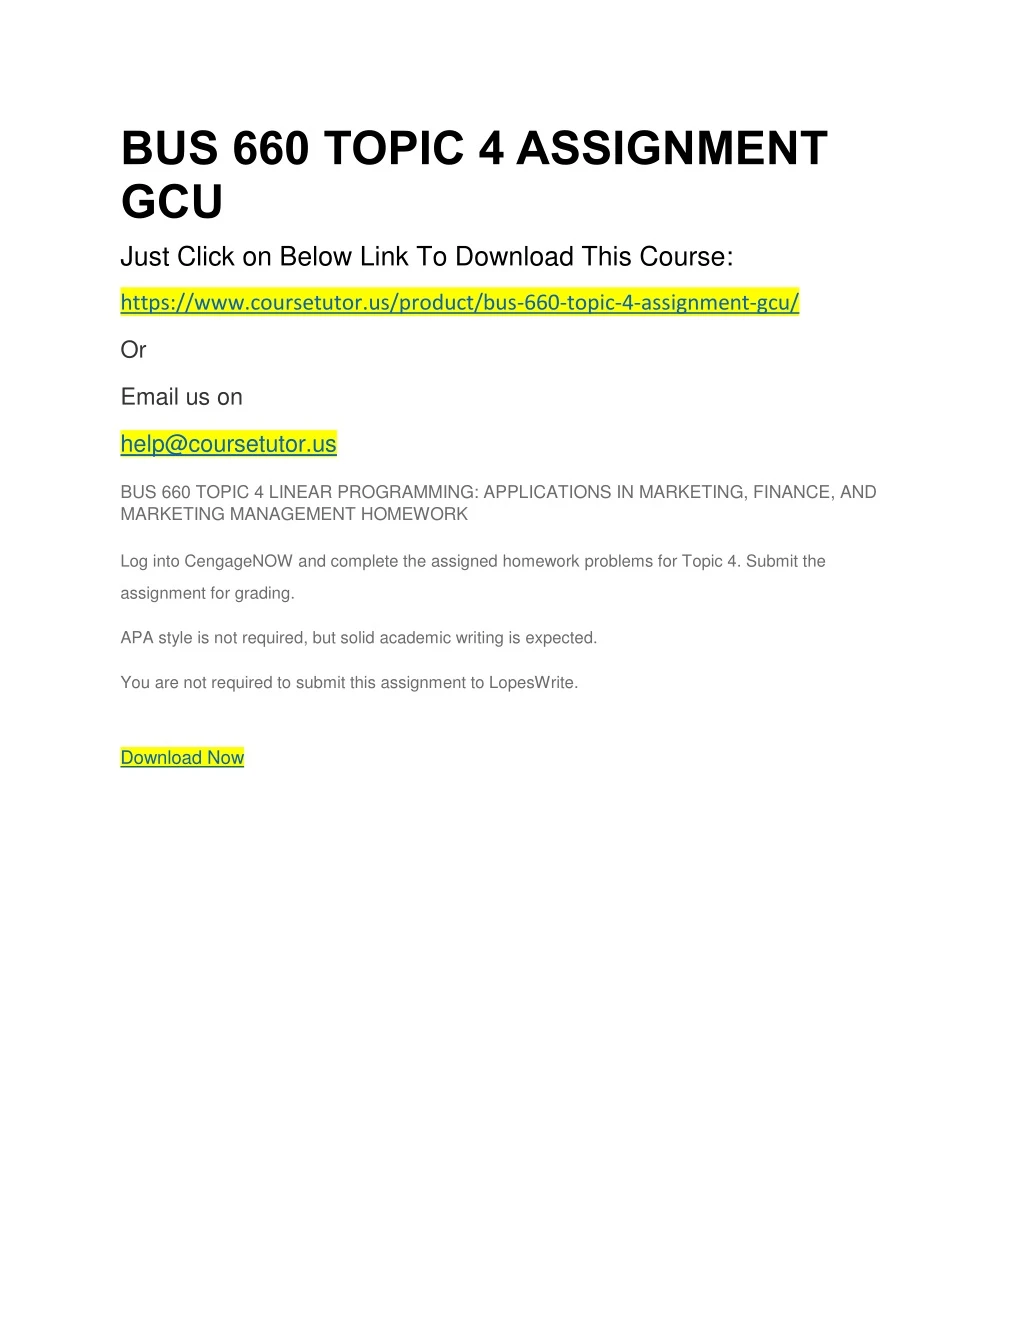 bus 660 topic 4 assignment gcu just click